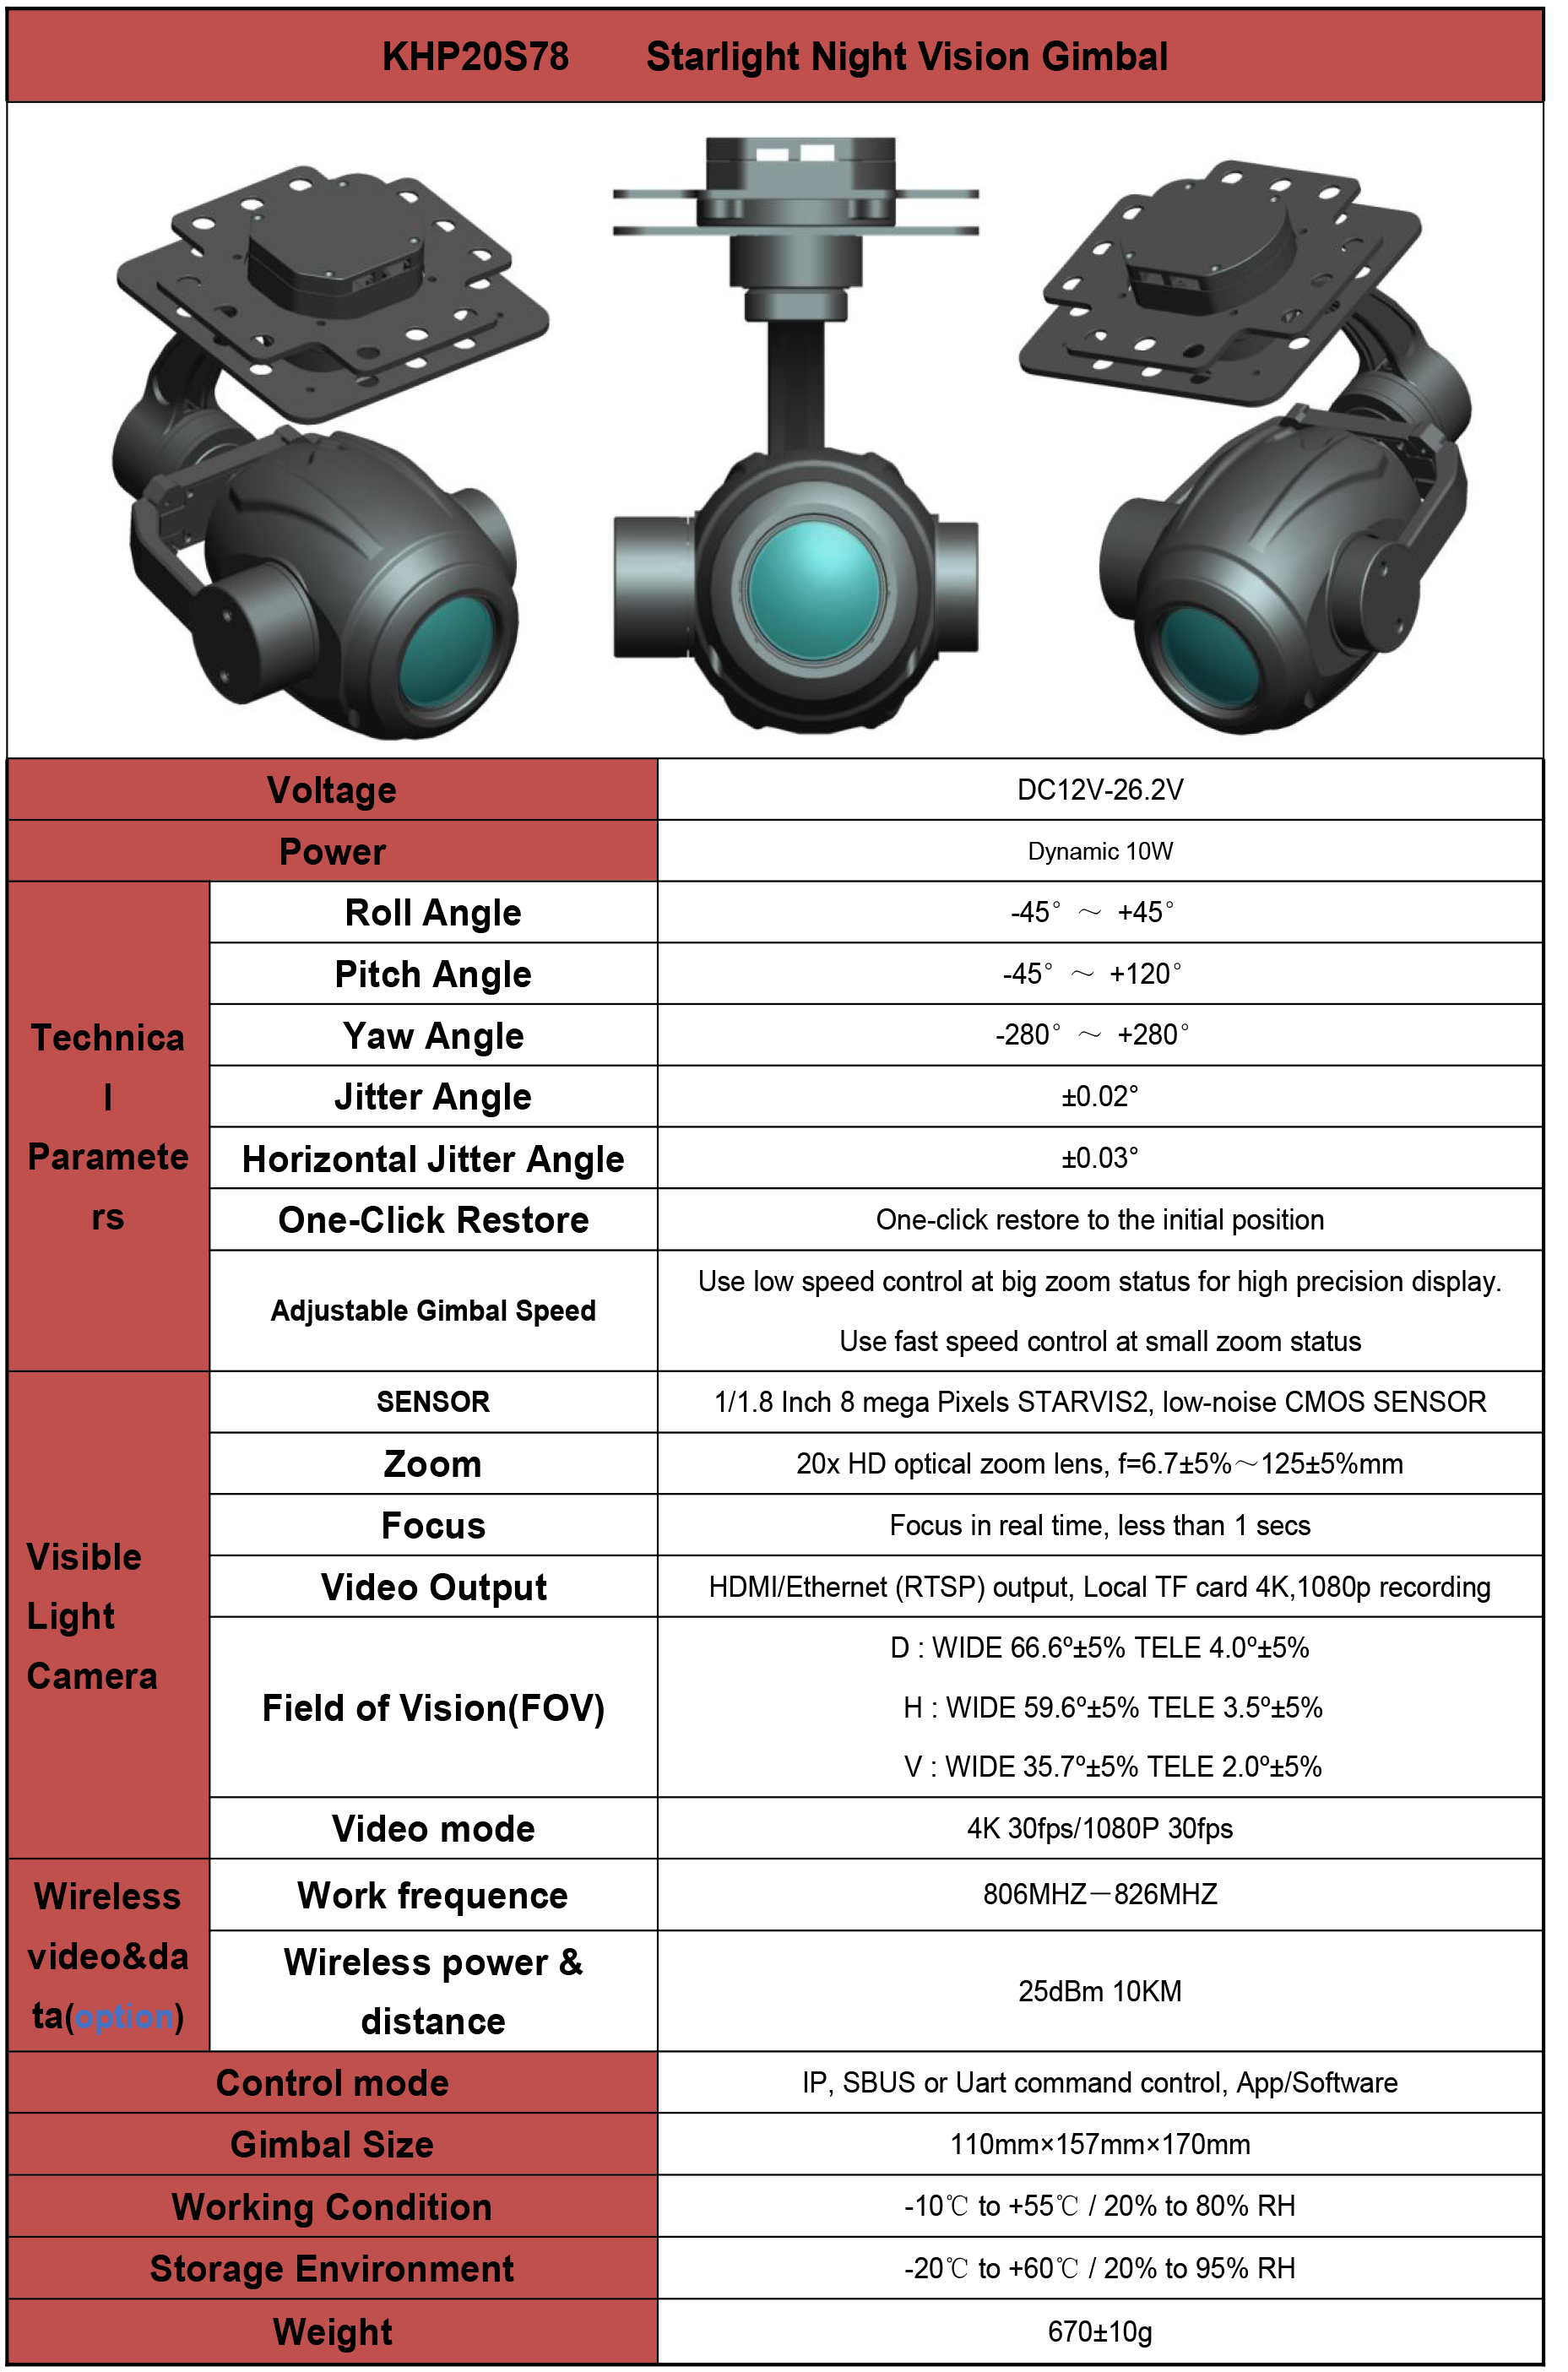 TOPOTEK KHP20S78 Gimbal Camera: Night vision camera with 20x optical zoom and 3-axis gimbal.